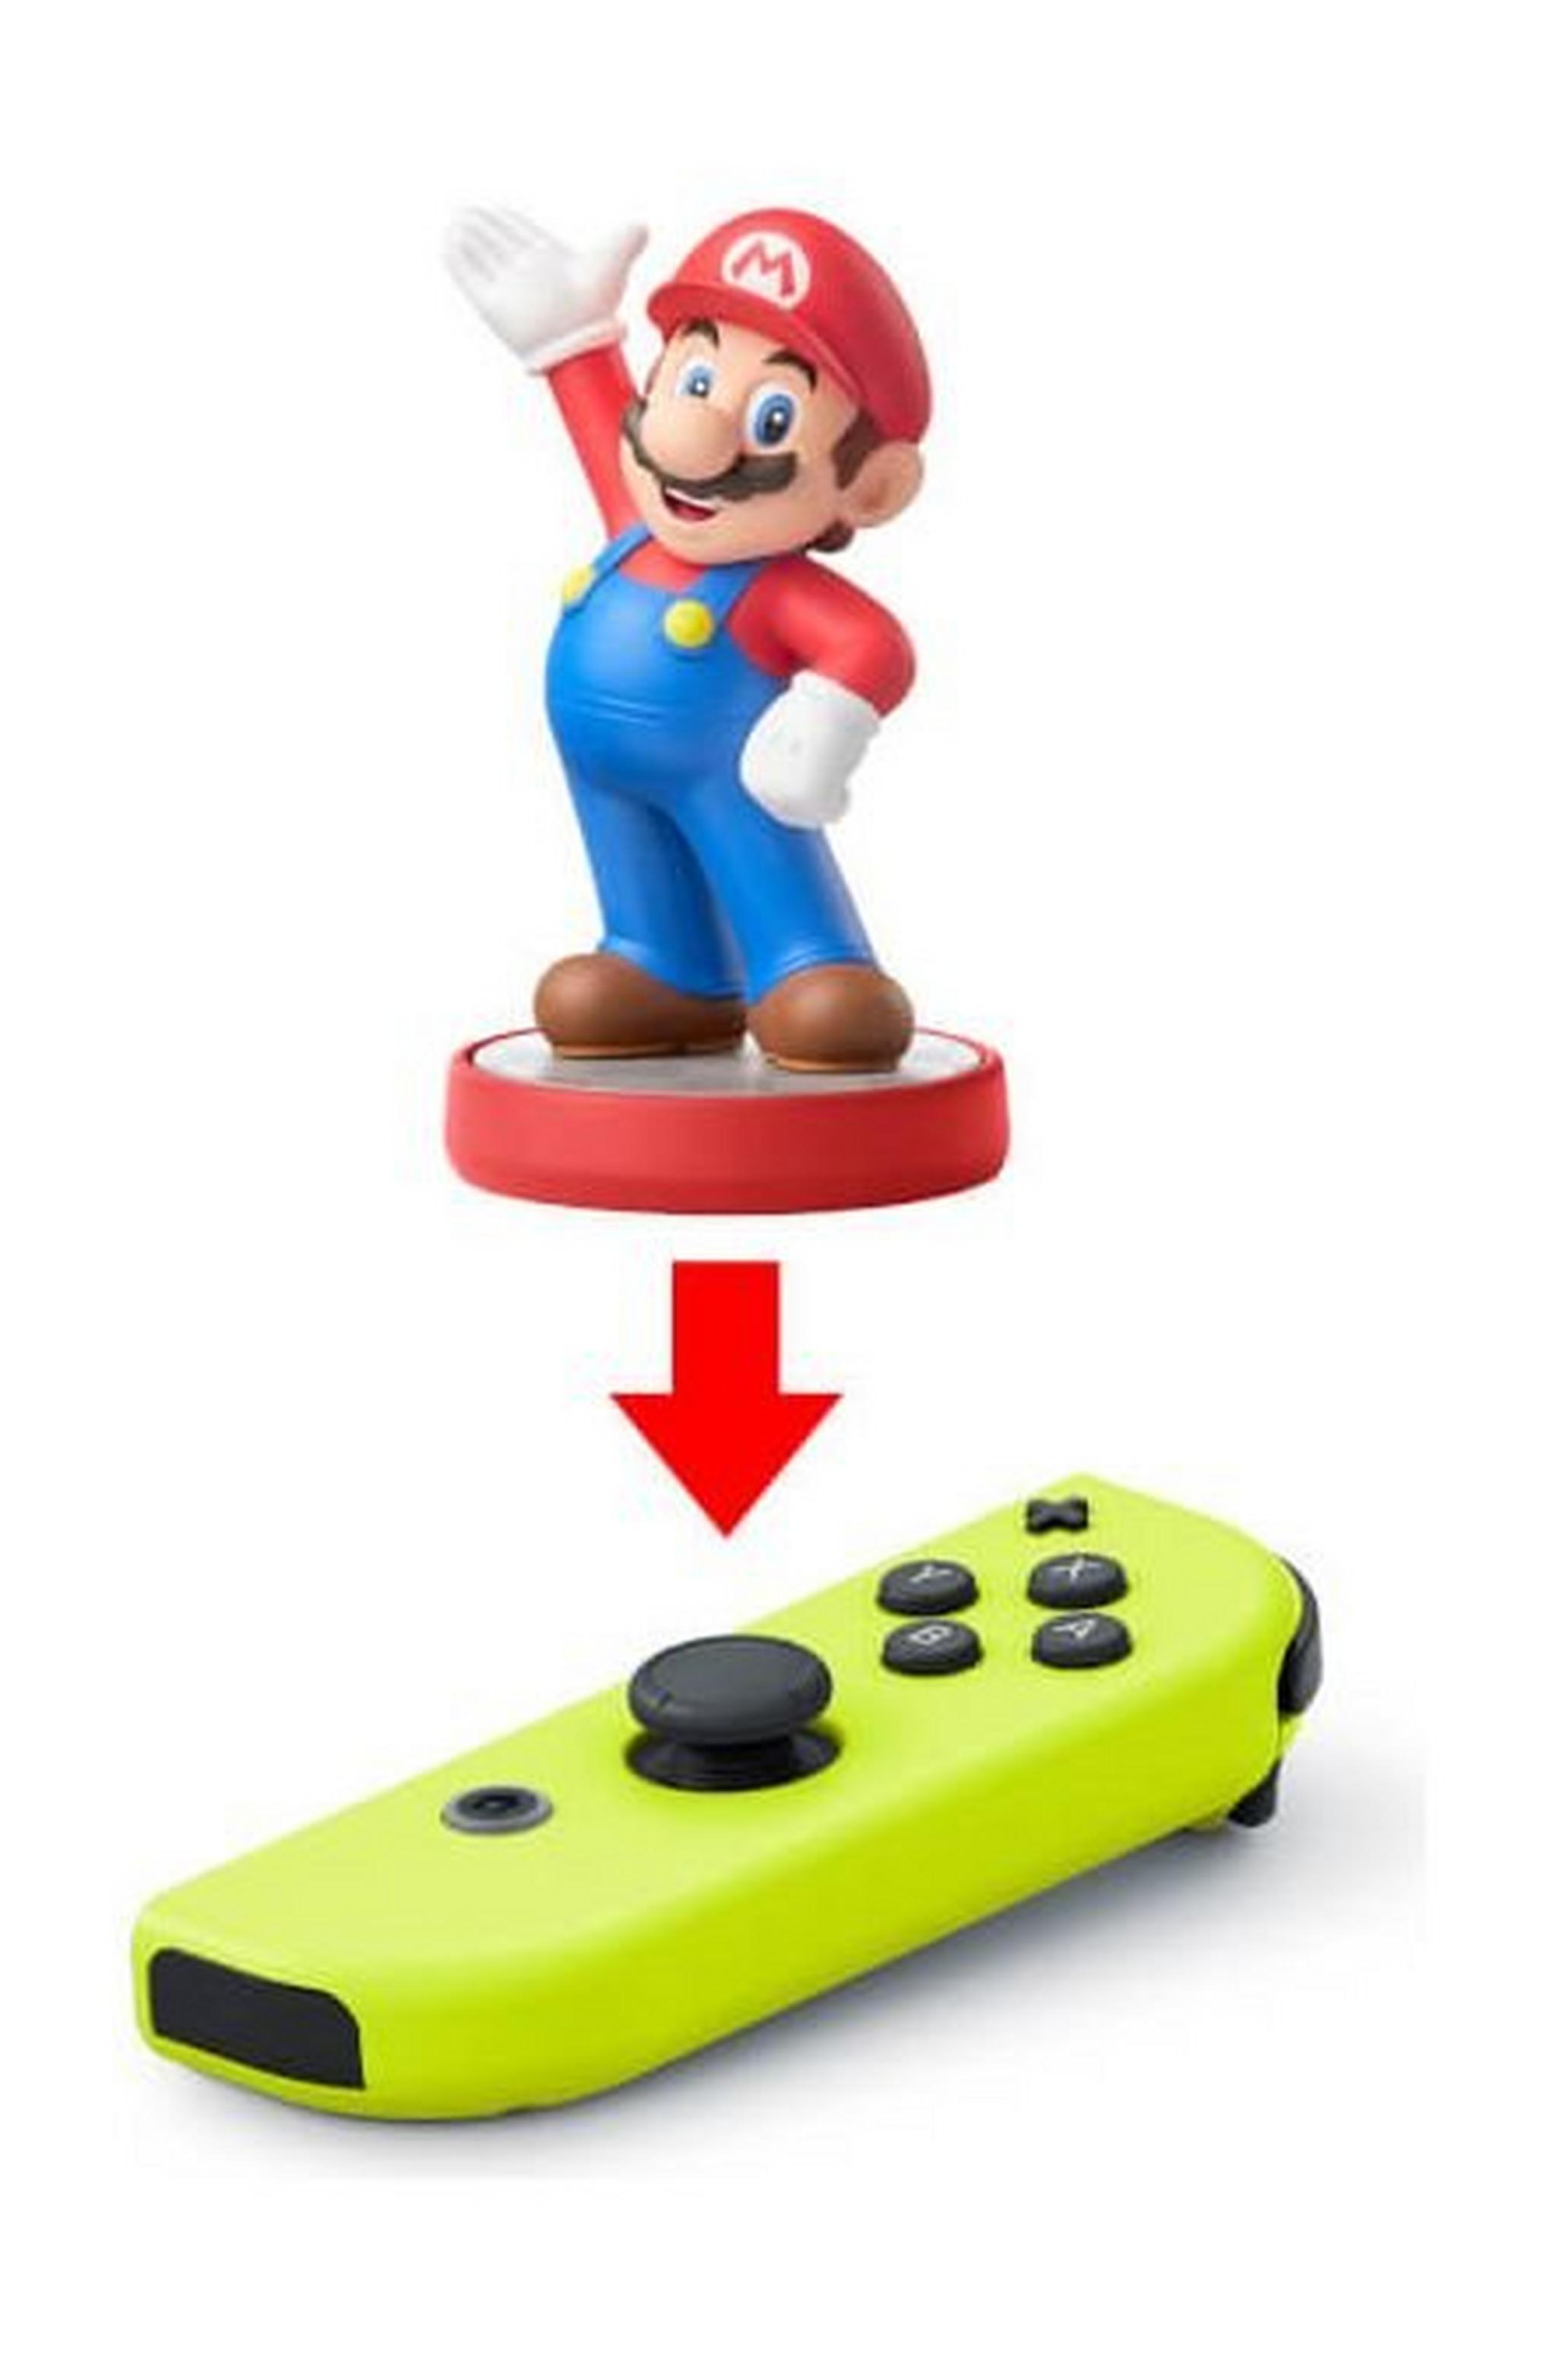 Nintendo Switch Joycon L/R Controller - Yellow